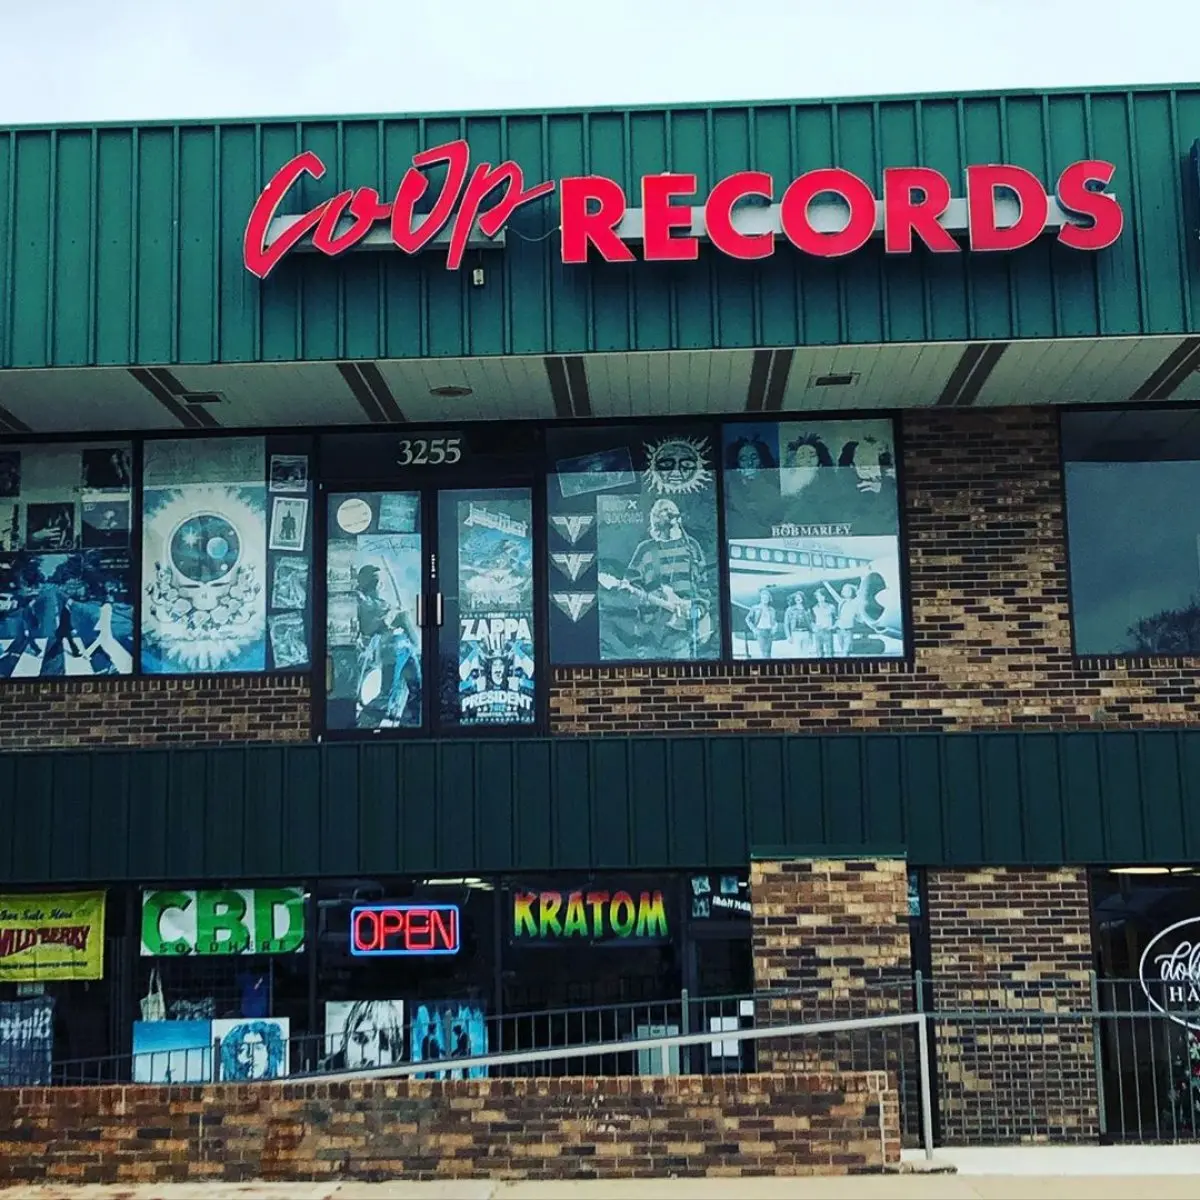 Co-Op Records of Pekin, Illinois